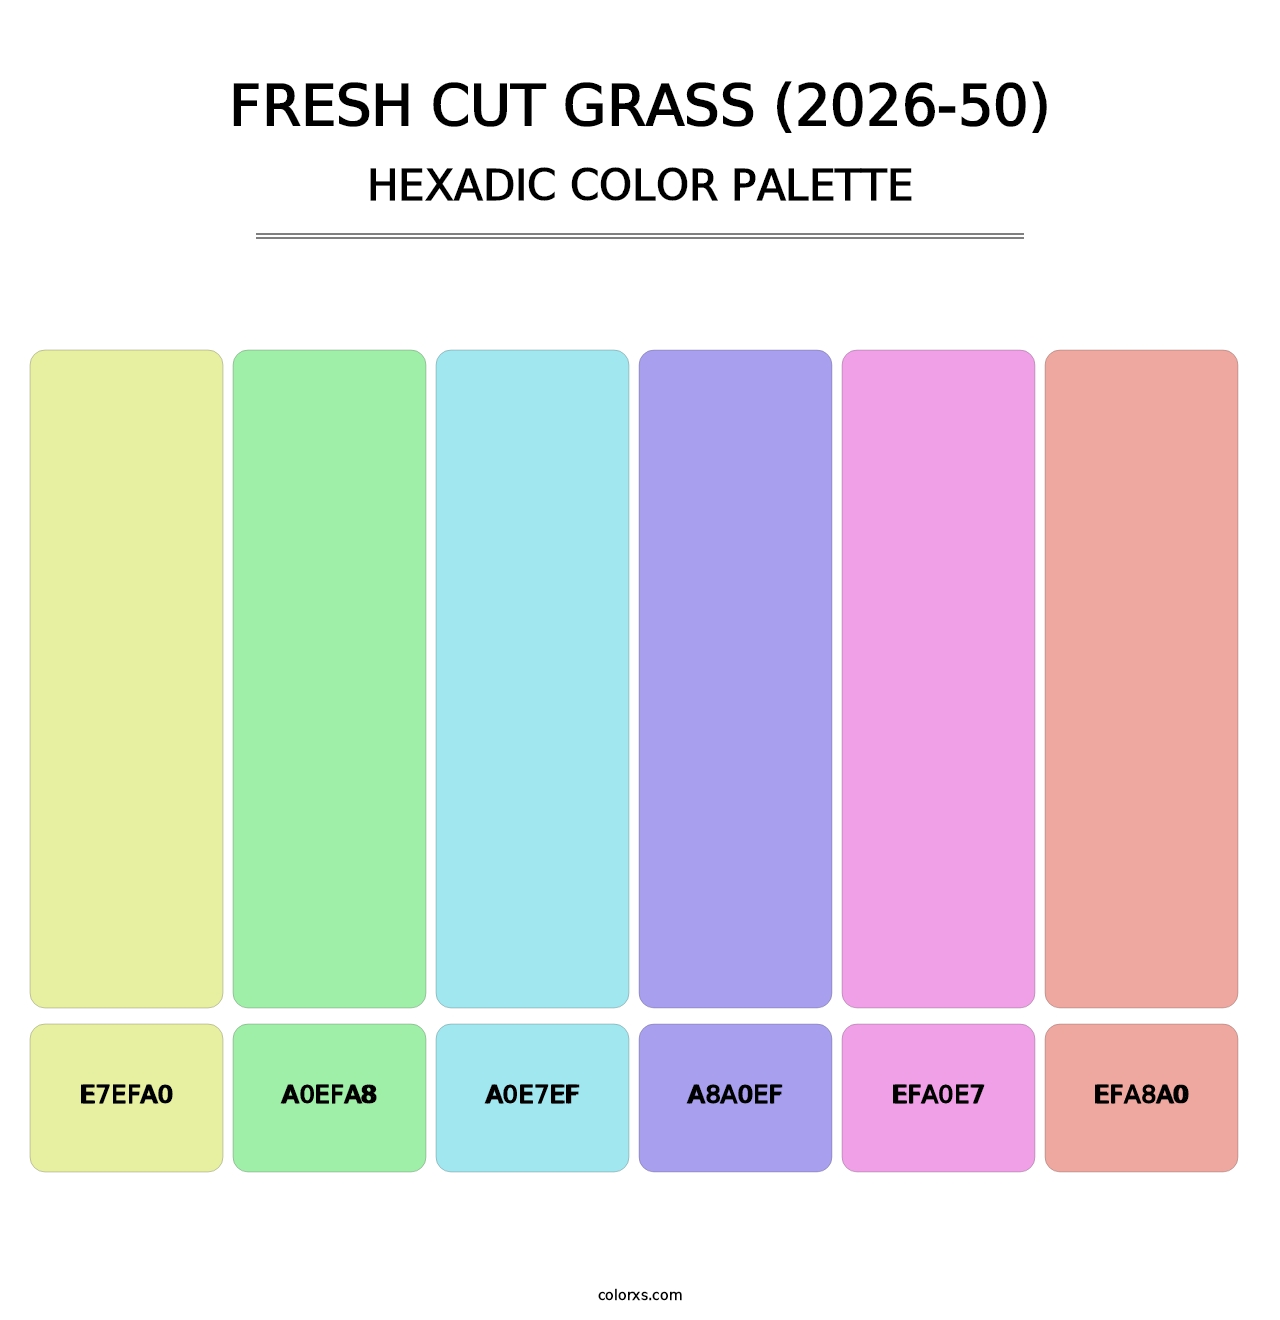 Fresh Cut Grass (2026-50) - Hexadic Color Palette